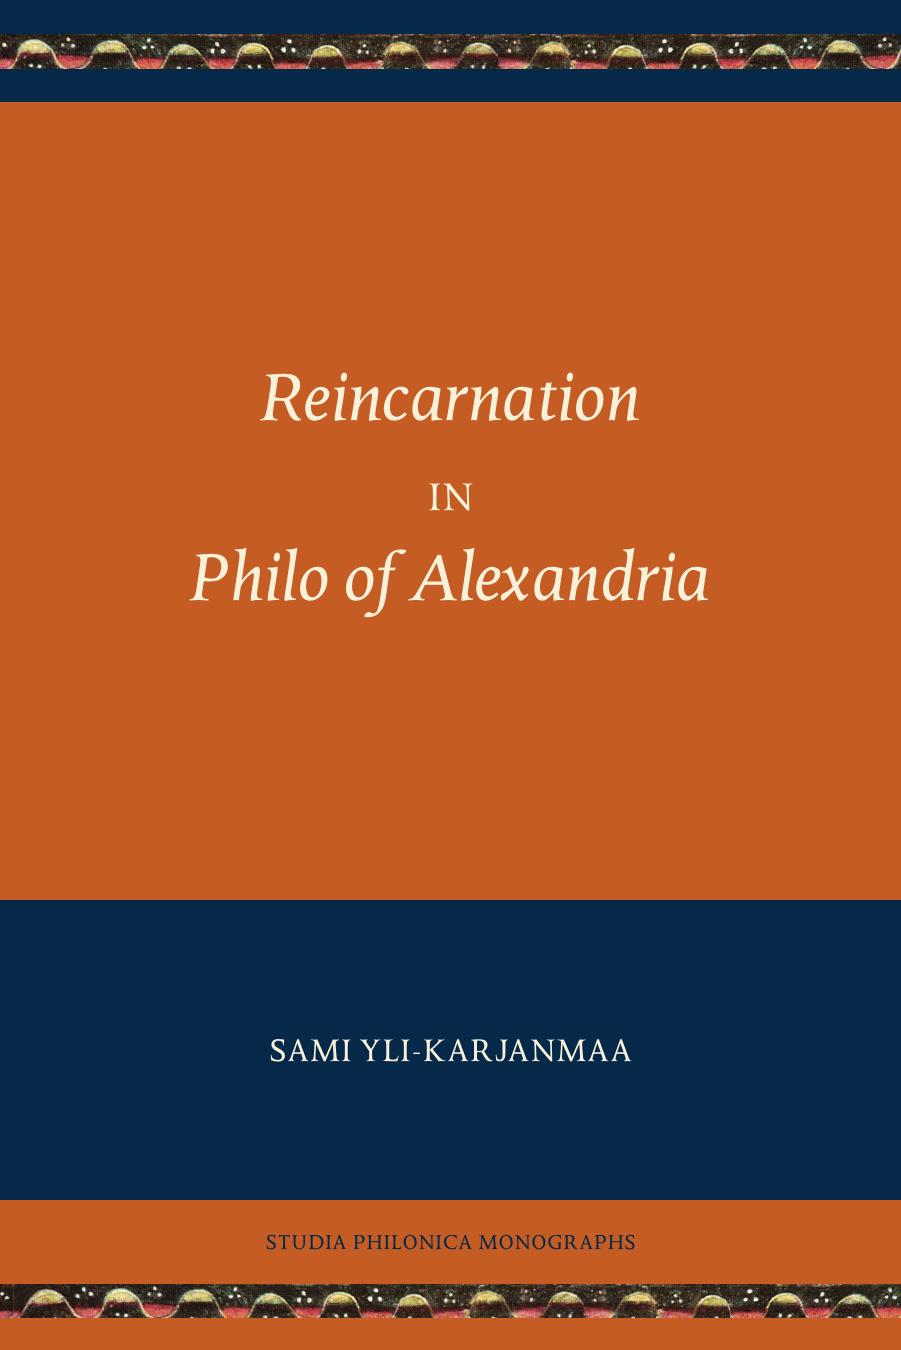 Reincarnation in Philo of Alexandria by Sami Yli-Karjanmaa